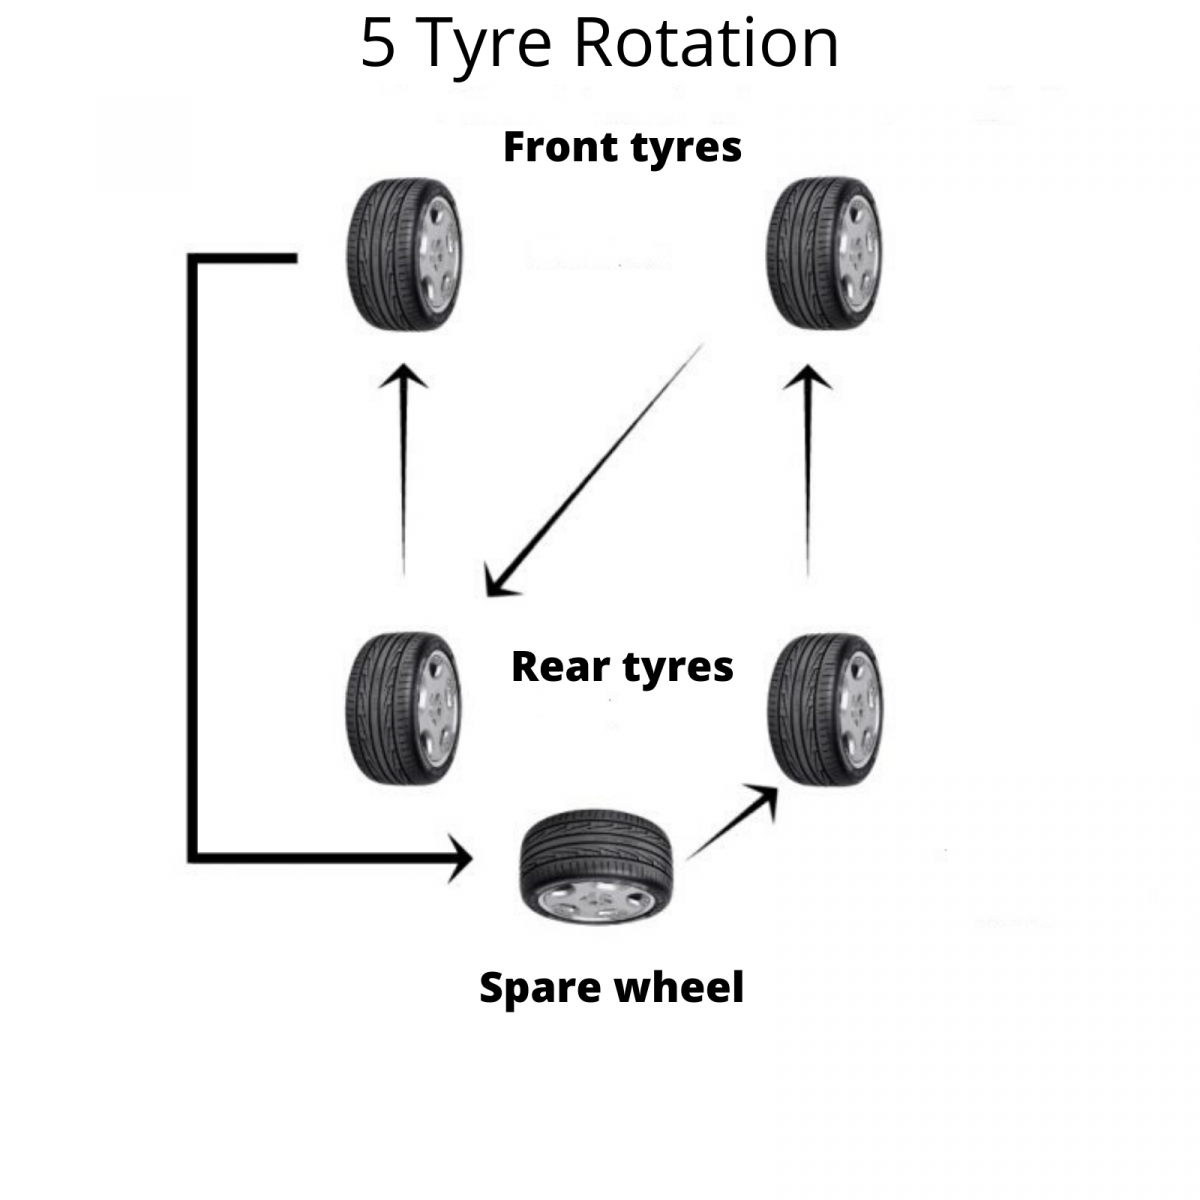 5 tyre rotation